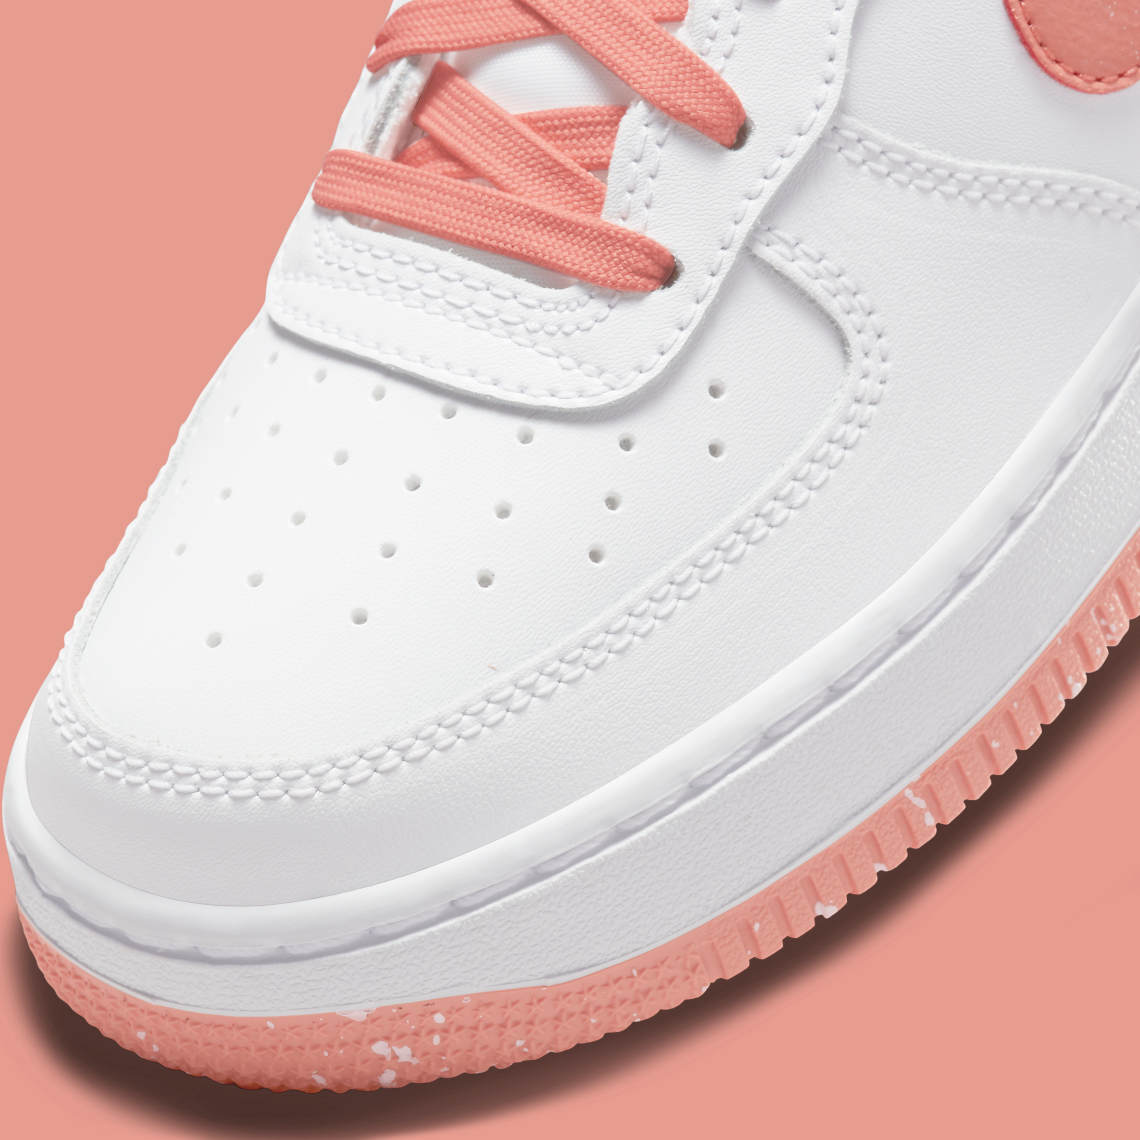 Nike Air Force 1 Low DM0985-100 Release Date | SneakerNews.com